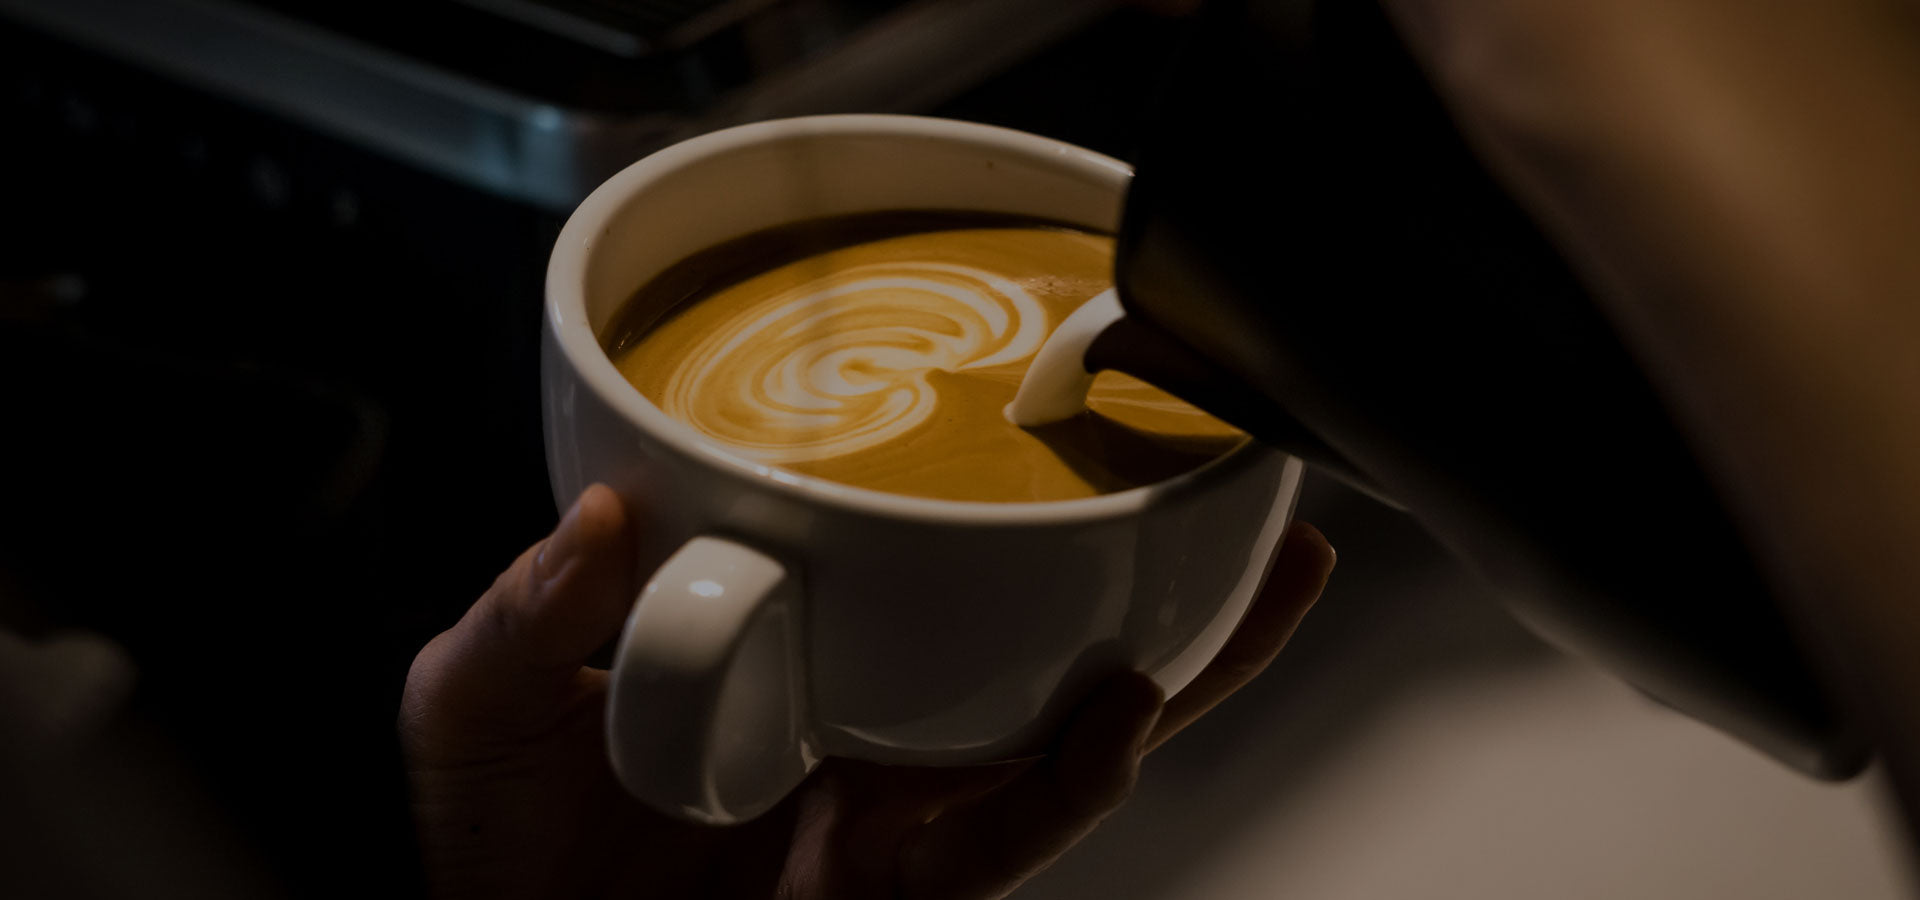 Home Cold Coffee Brewing Kit - La Vela Coffee - Enjoy Today! – La Vela  Coffee Roasters